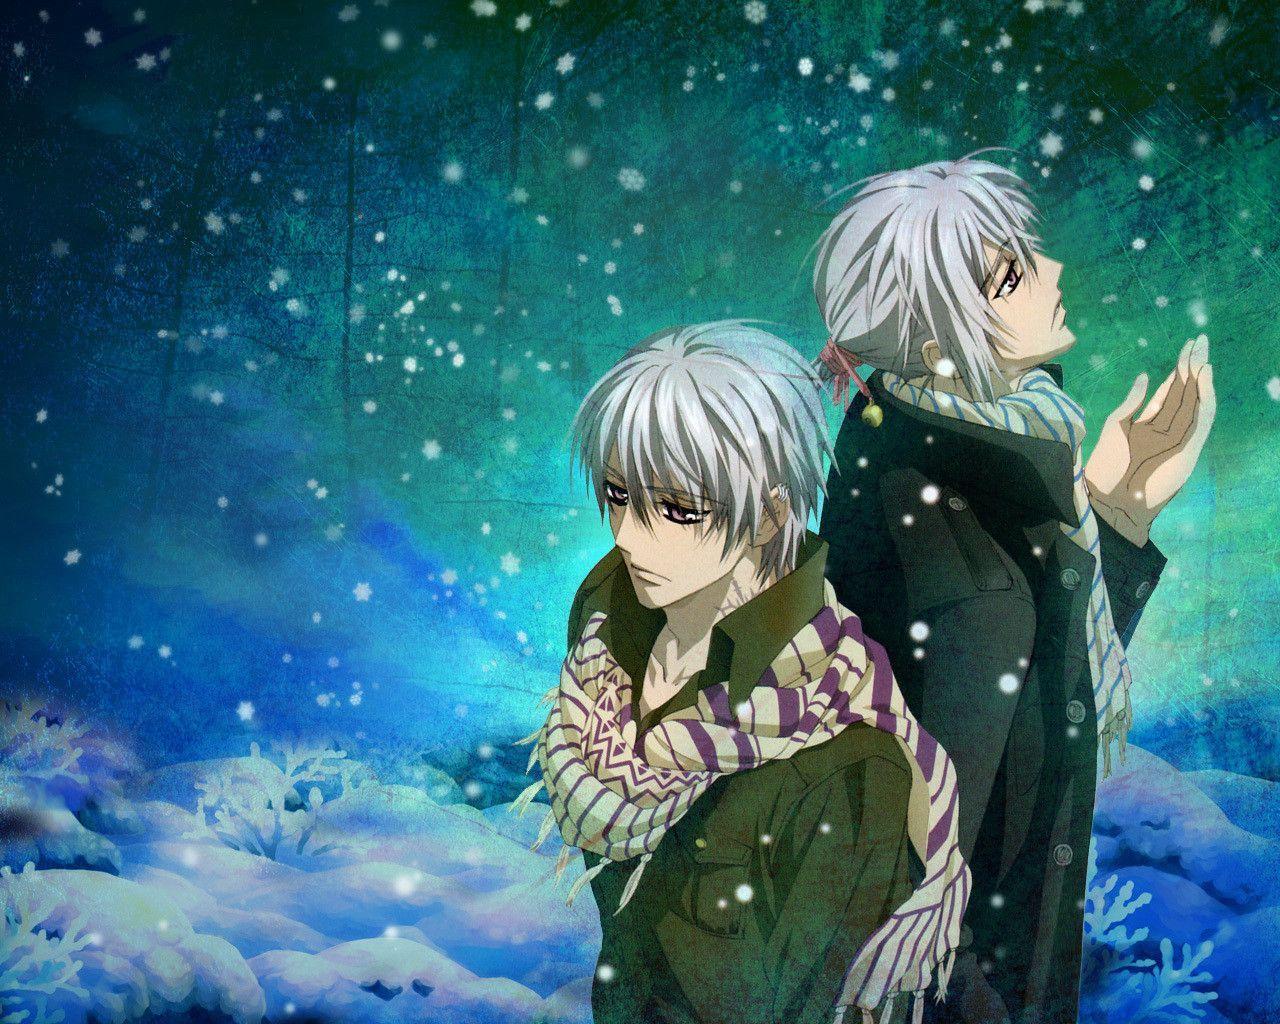 Zero and Ichiru Kiryu Theme Cursed Twins Wallpaper